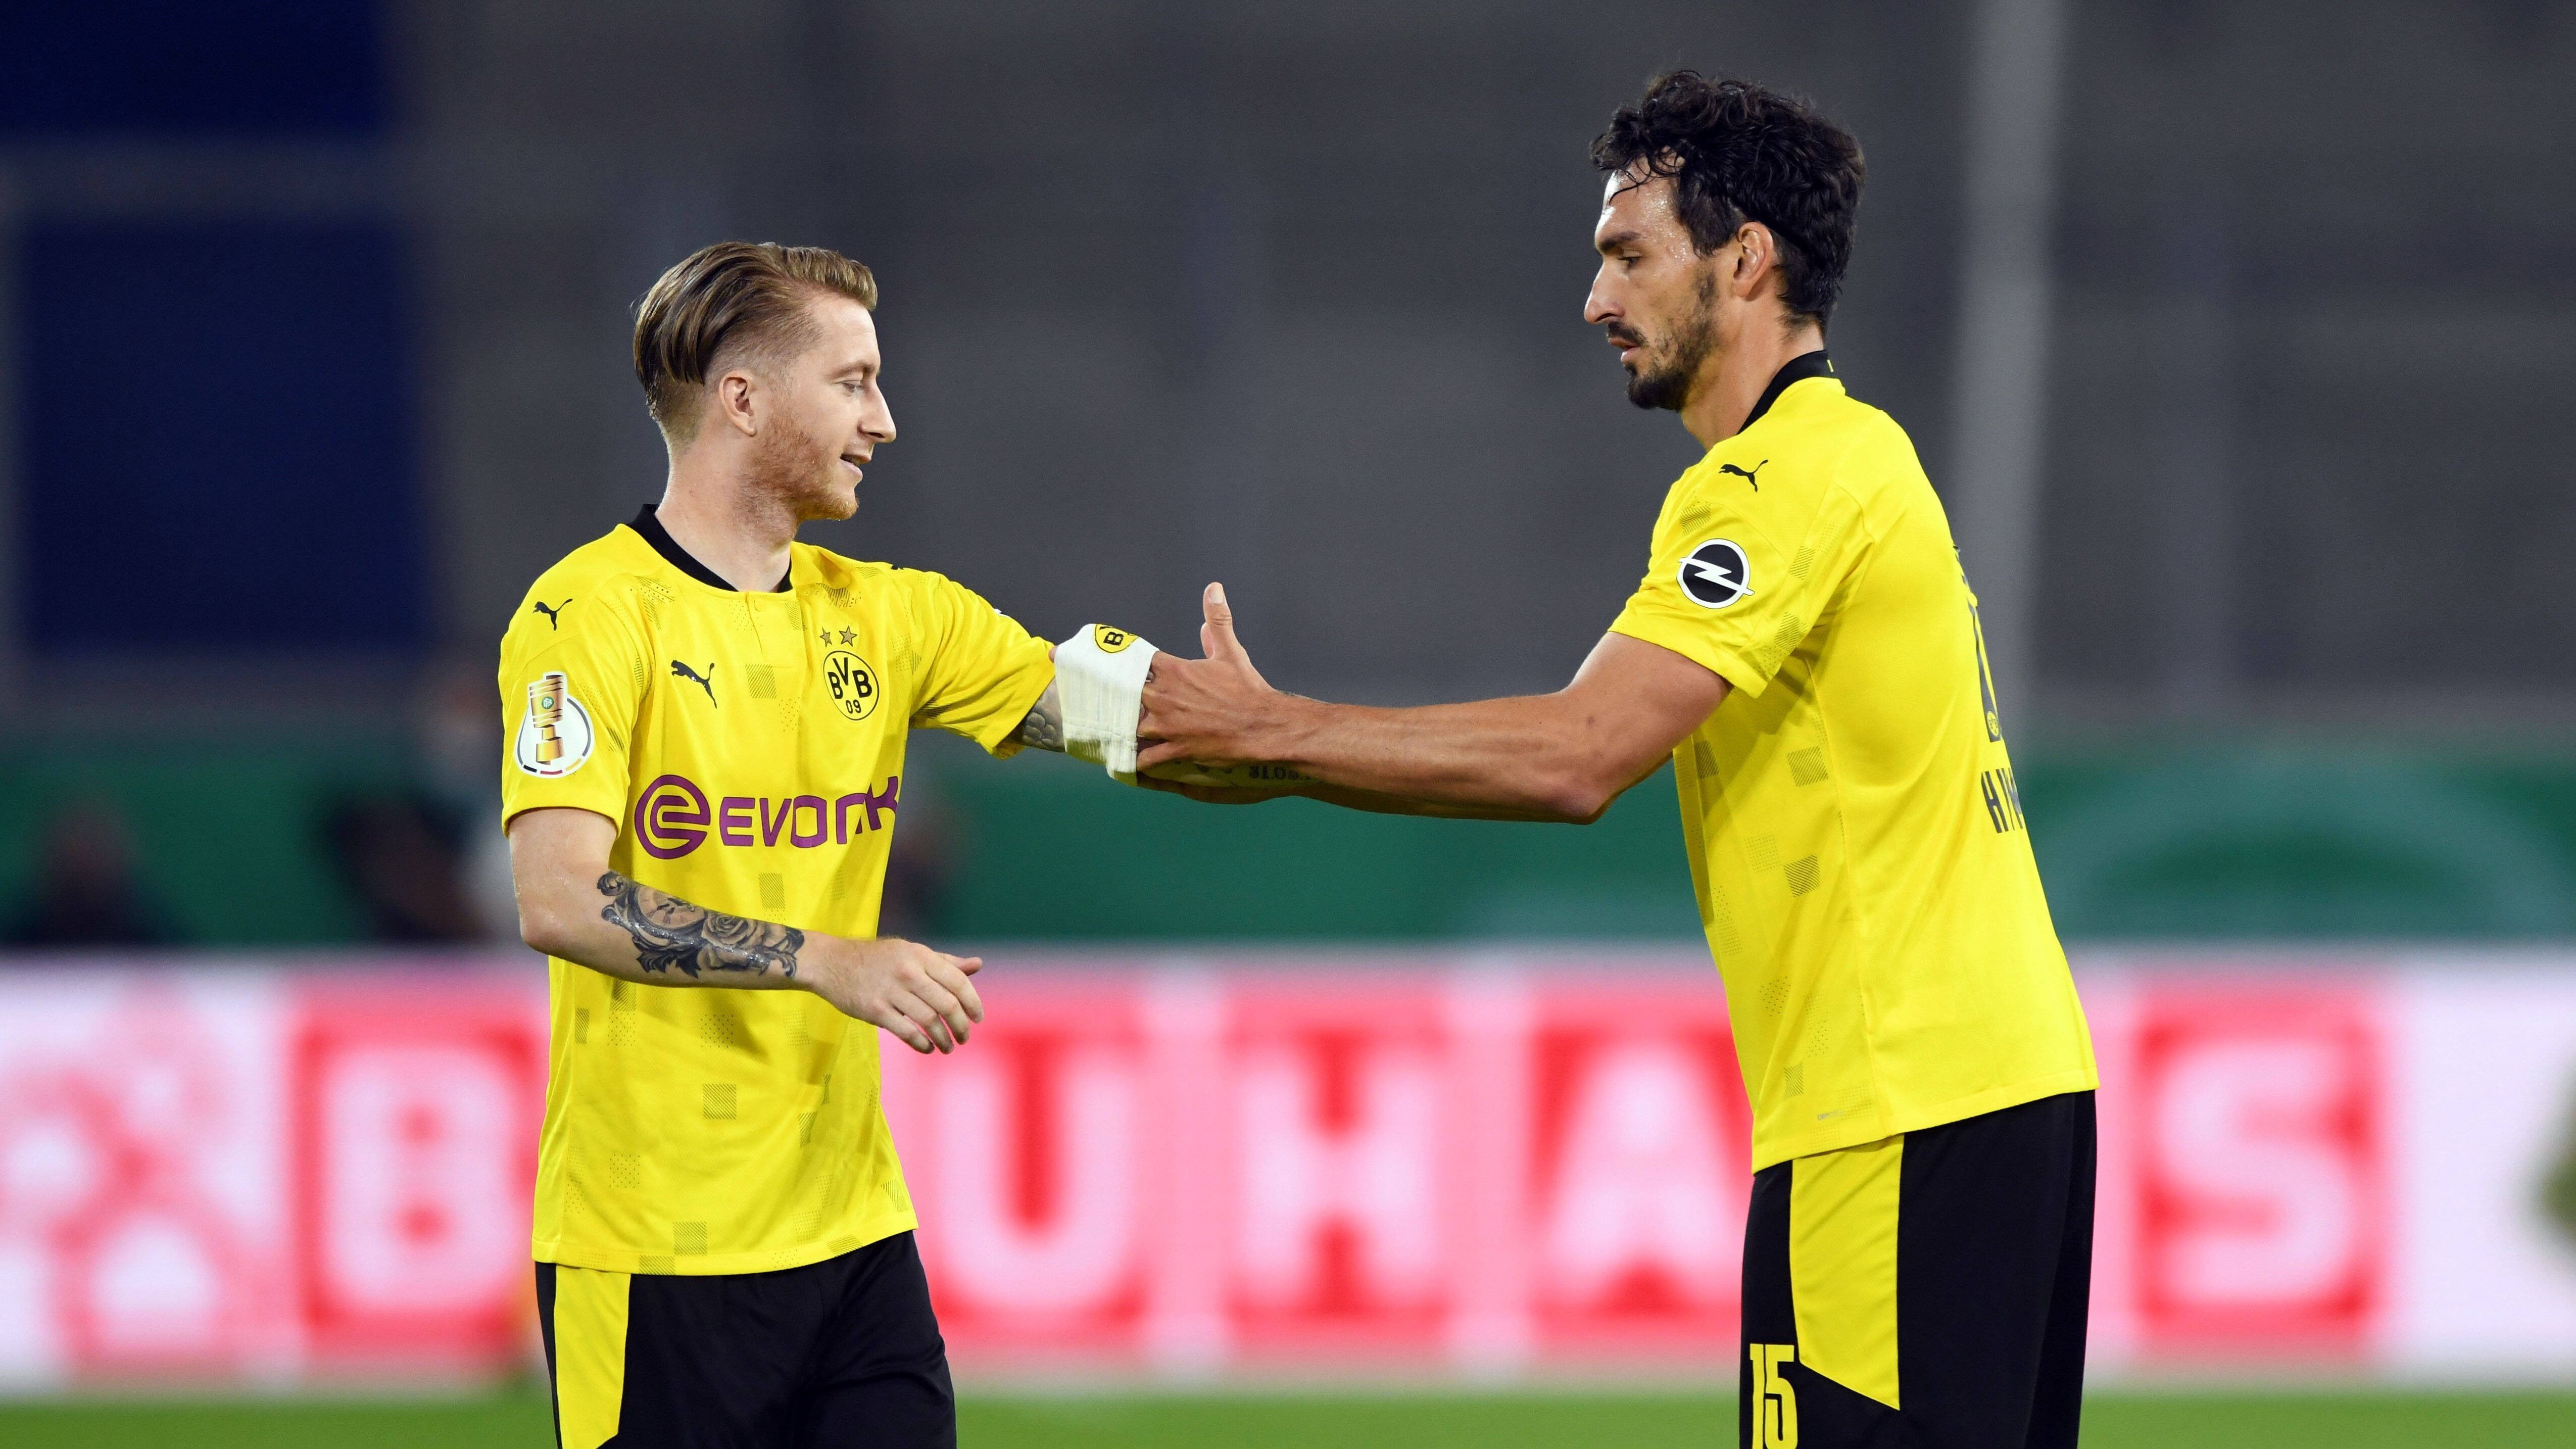 
                <strong>Borussia Dortmund</strong><br>
                1. Marco Reus (Kapitän)2. Mats Hummels3. Axel WitselWeitere Mitglieder: Thomas Delaney, Emre Can
              